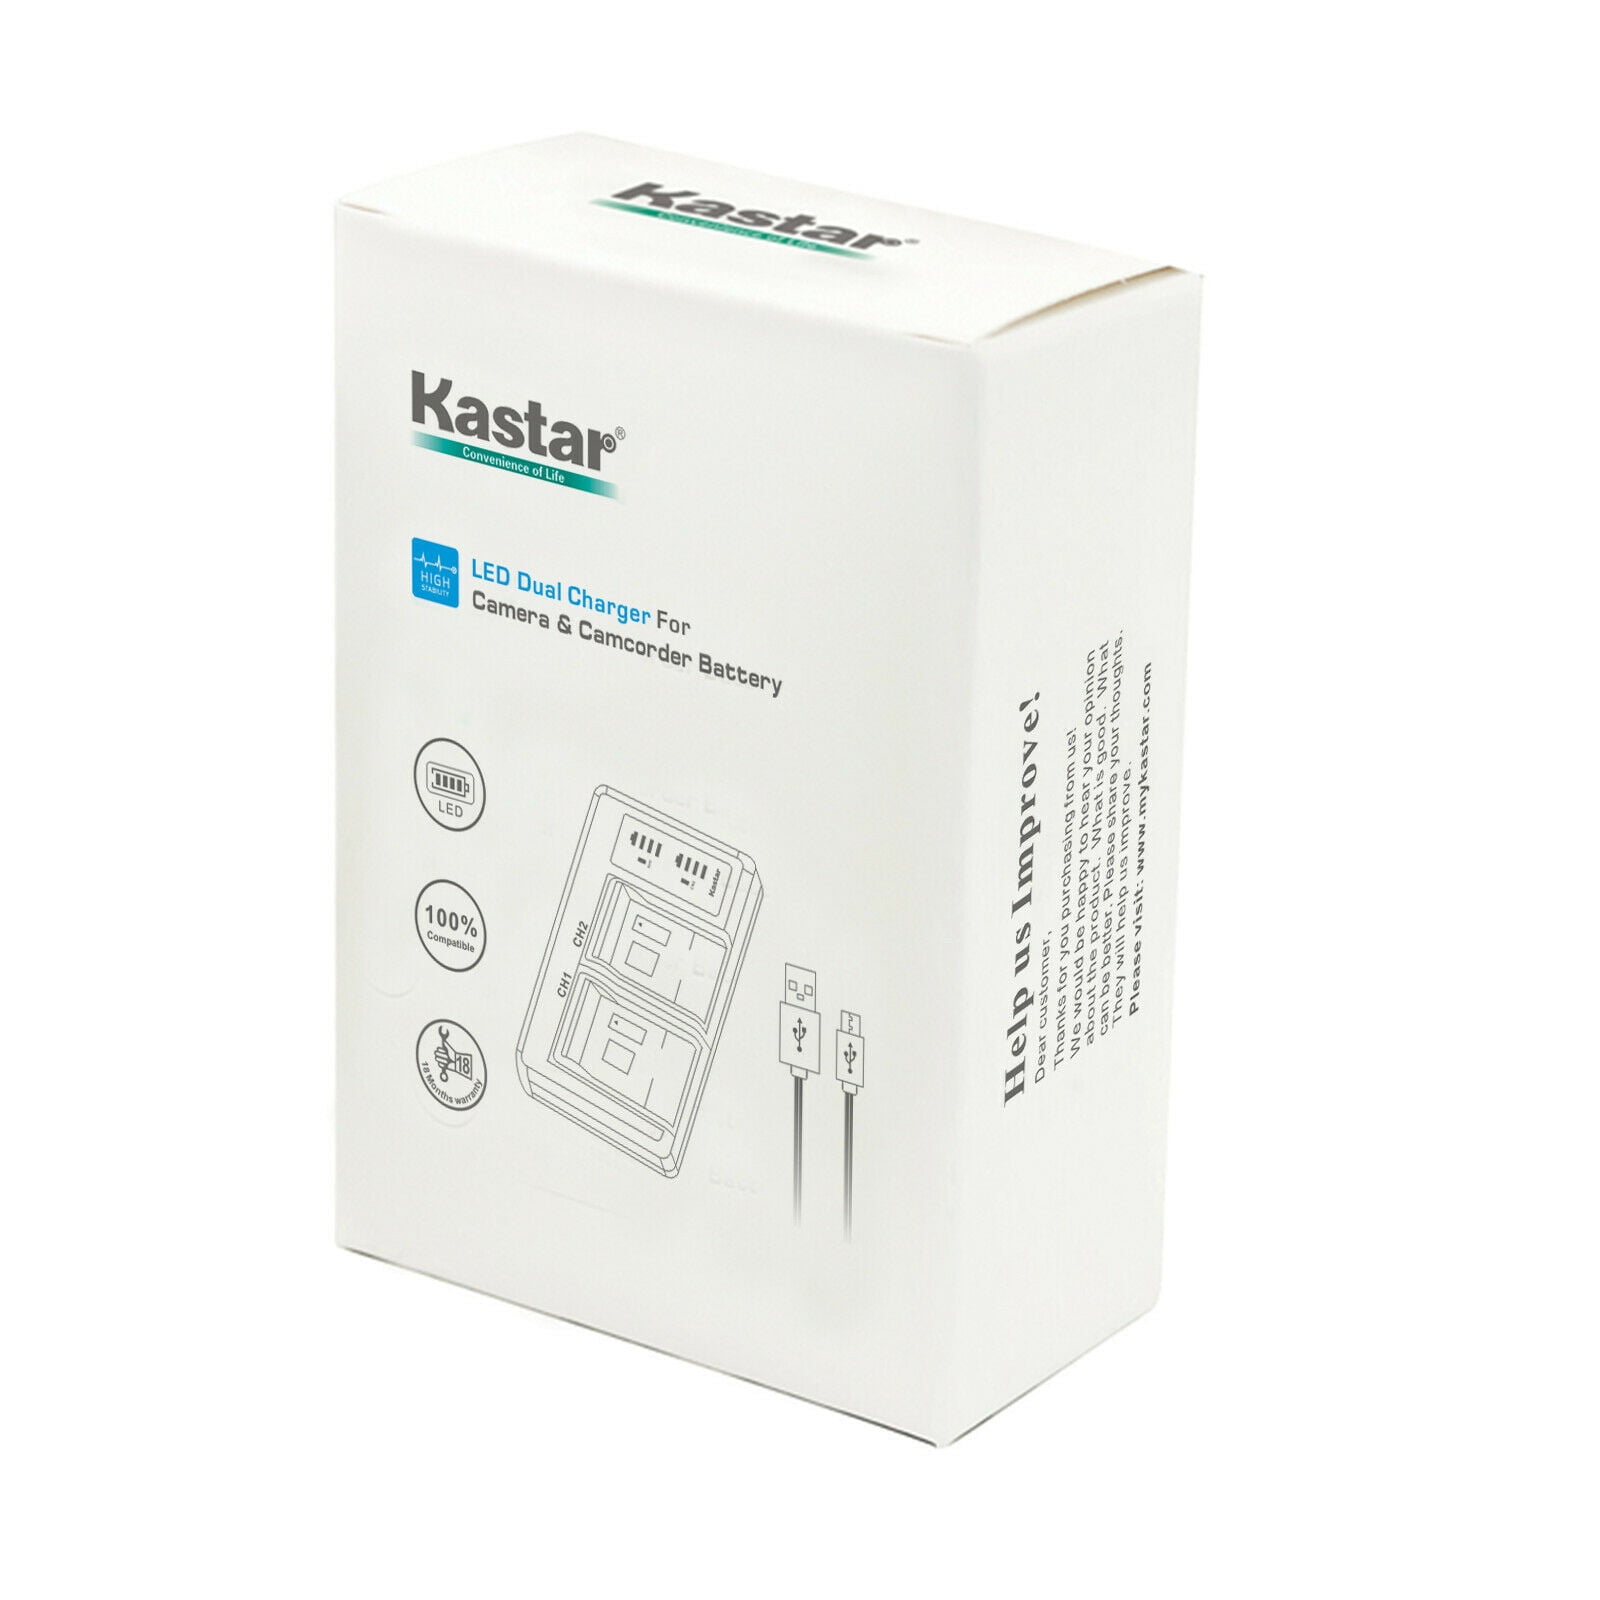 Kastar 4-Pack Battery and LTD2 USB Charger Replacement for Kodak LB-060  LB060 Battery, Kodak PixPro AZ525, PixPro AZ526, PixPro AZ527, PixPro AZ528  Digital Camera, Minolta MN53Z 16MP FHD Bridge Camera 